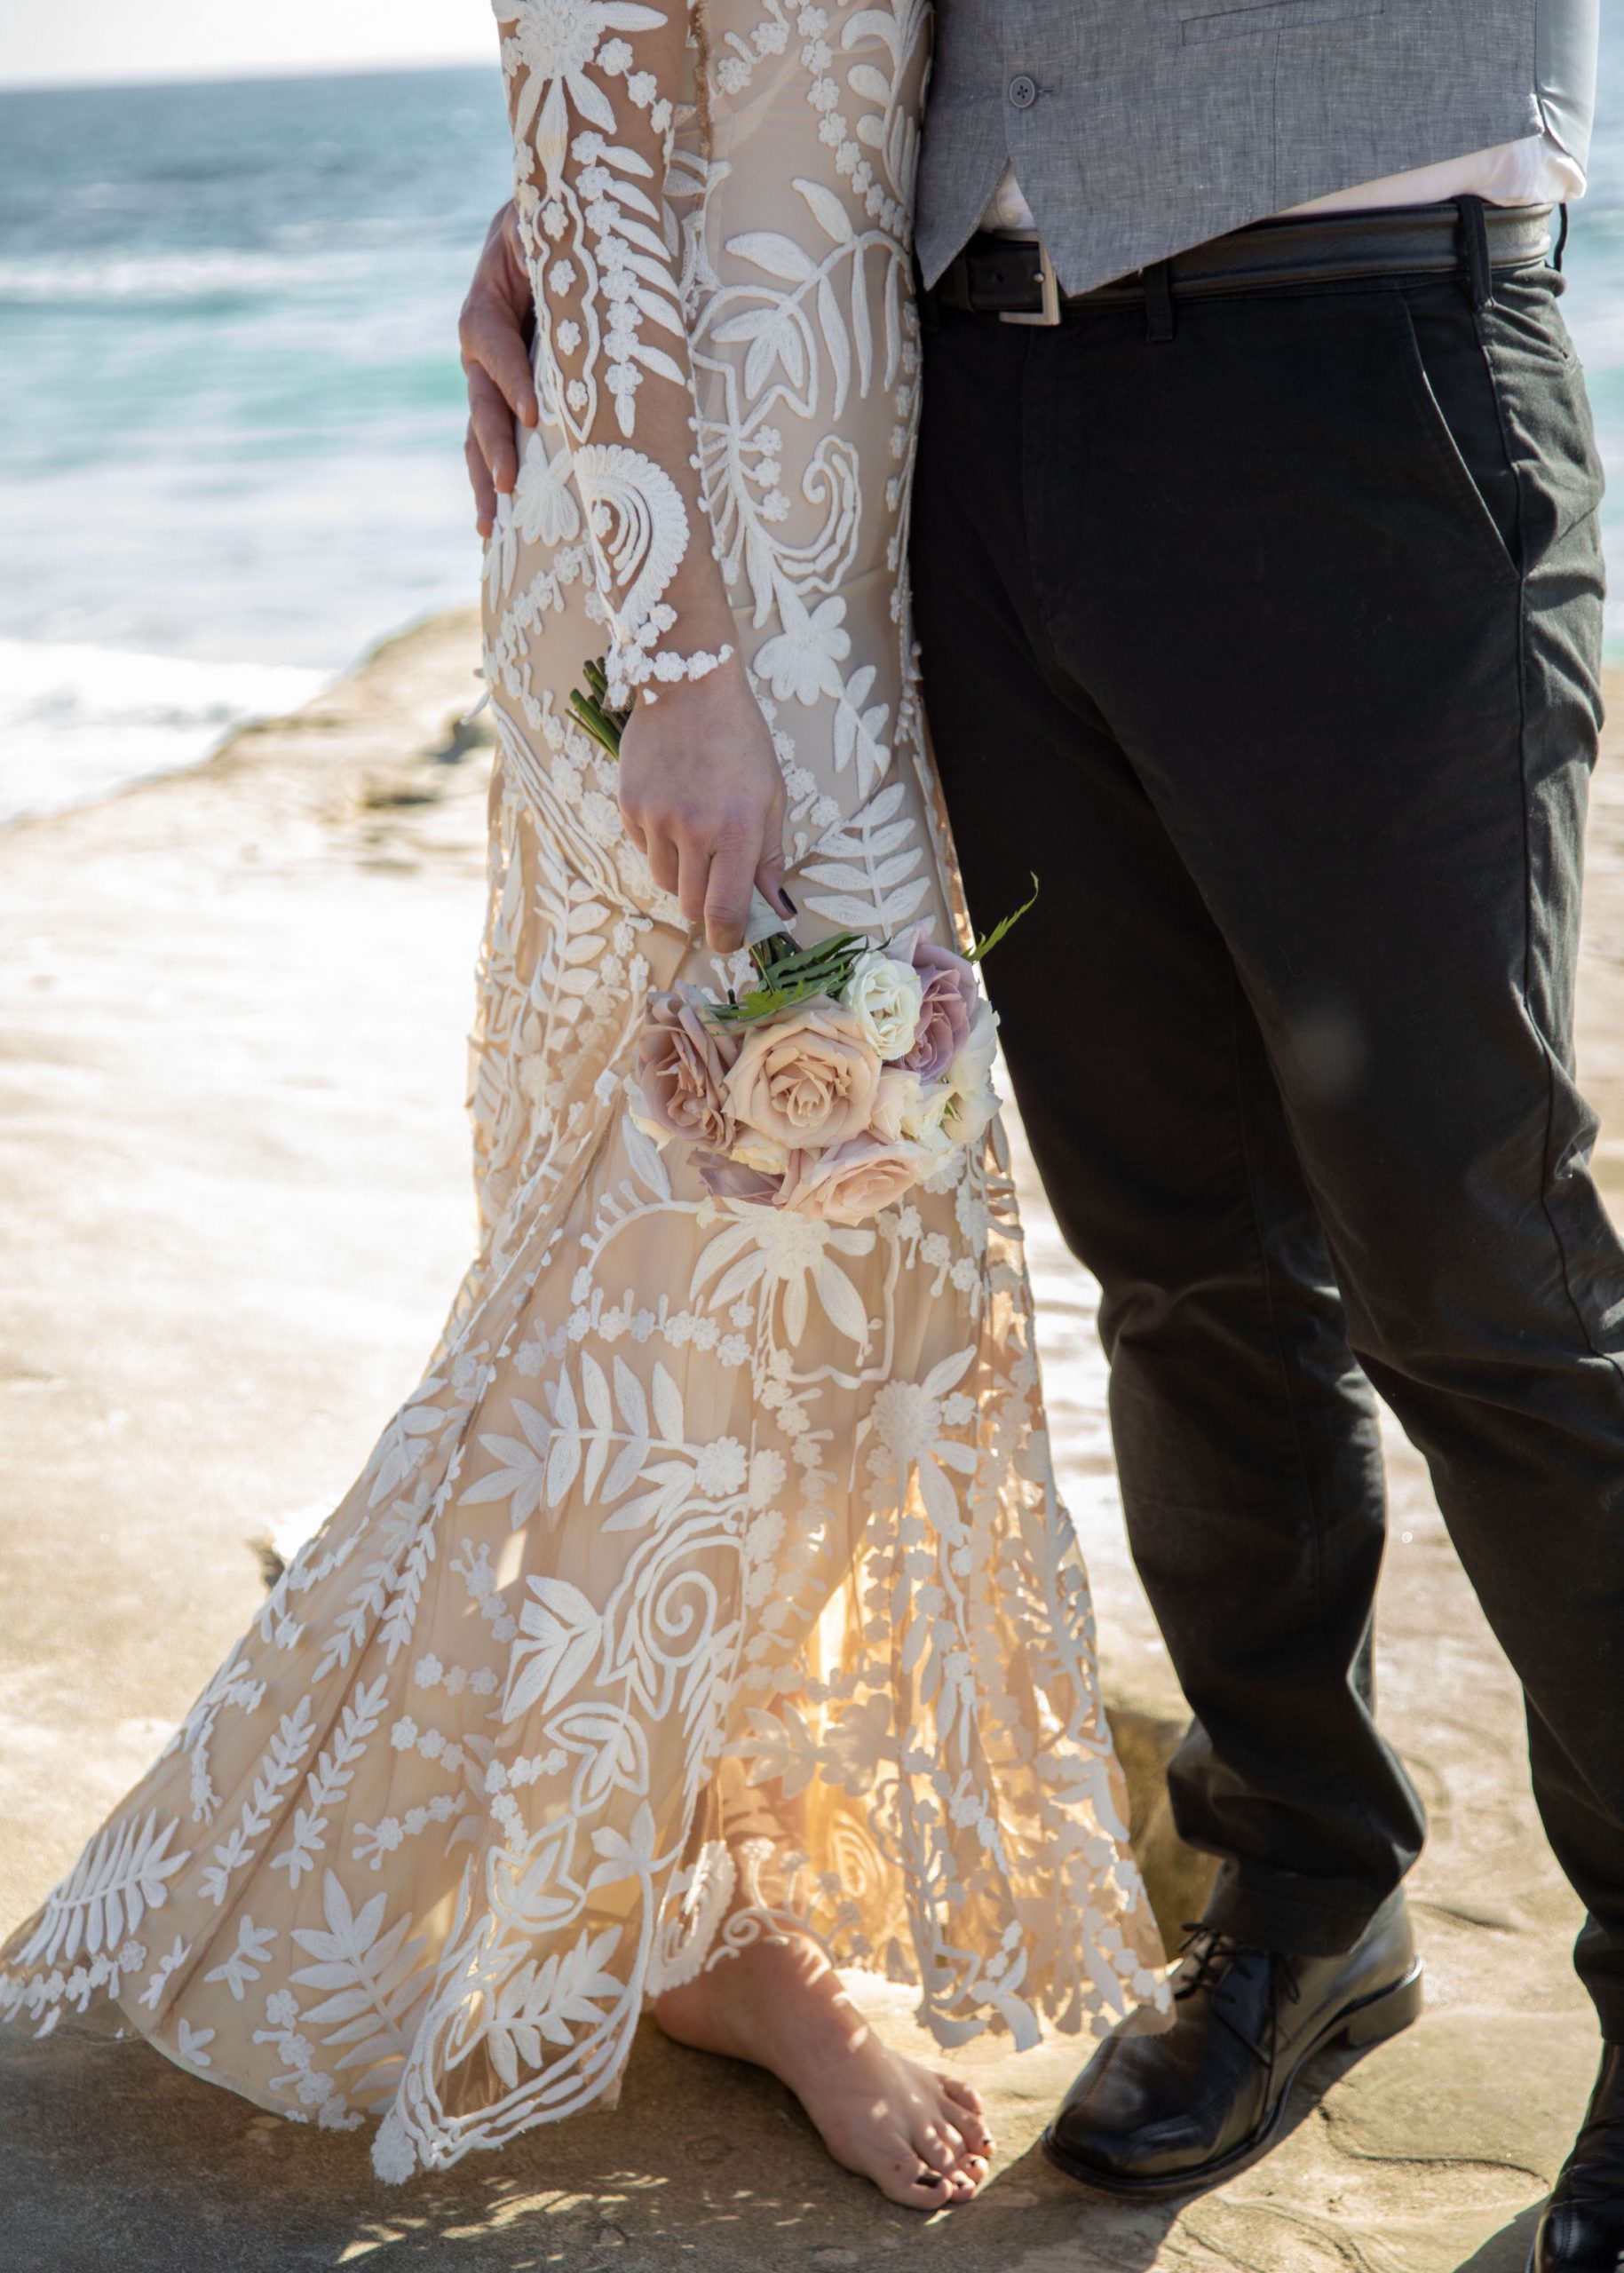 Bride and groom sunset portraits at Windansea Beach La Jolla, California.